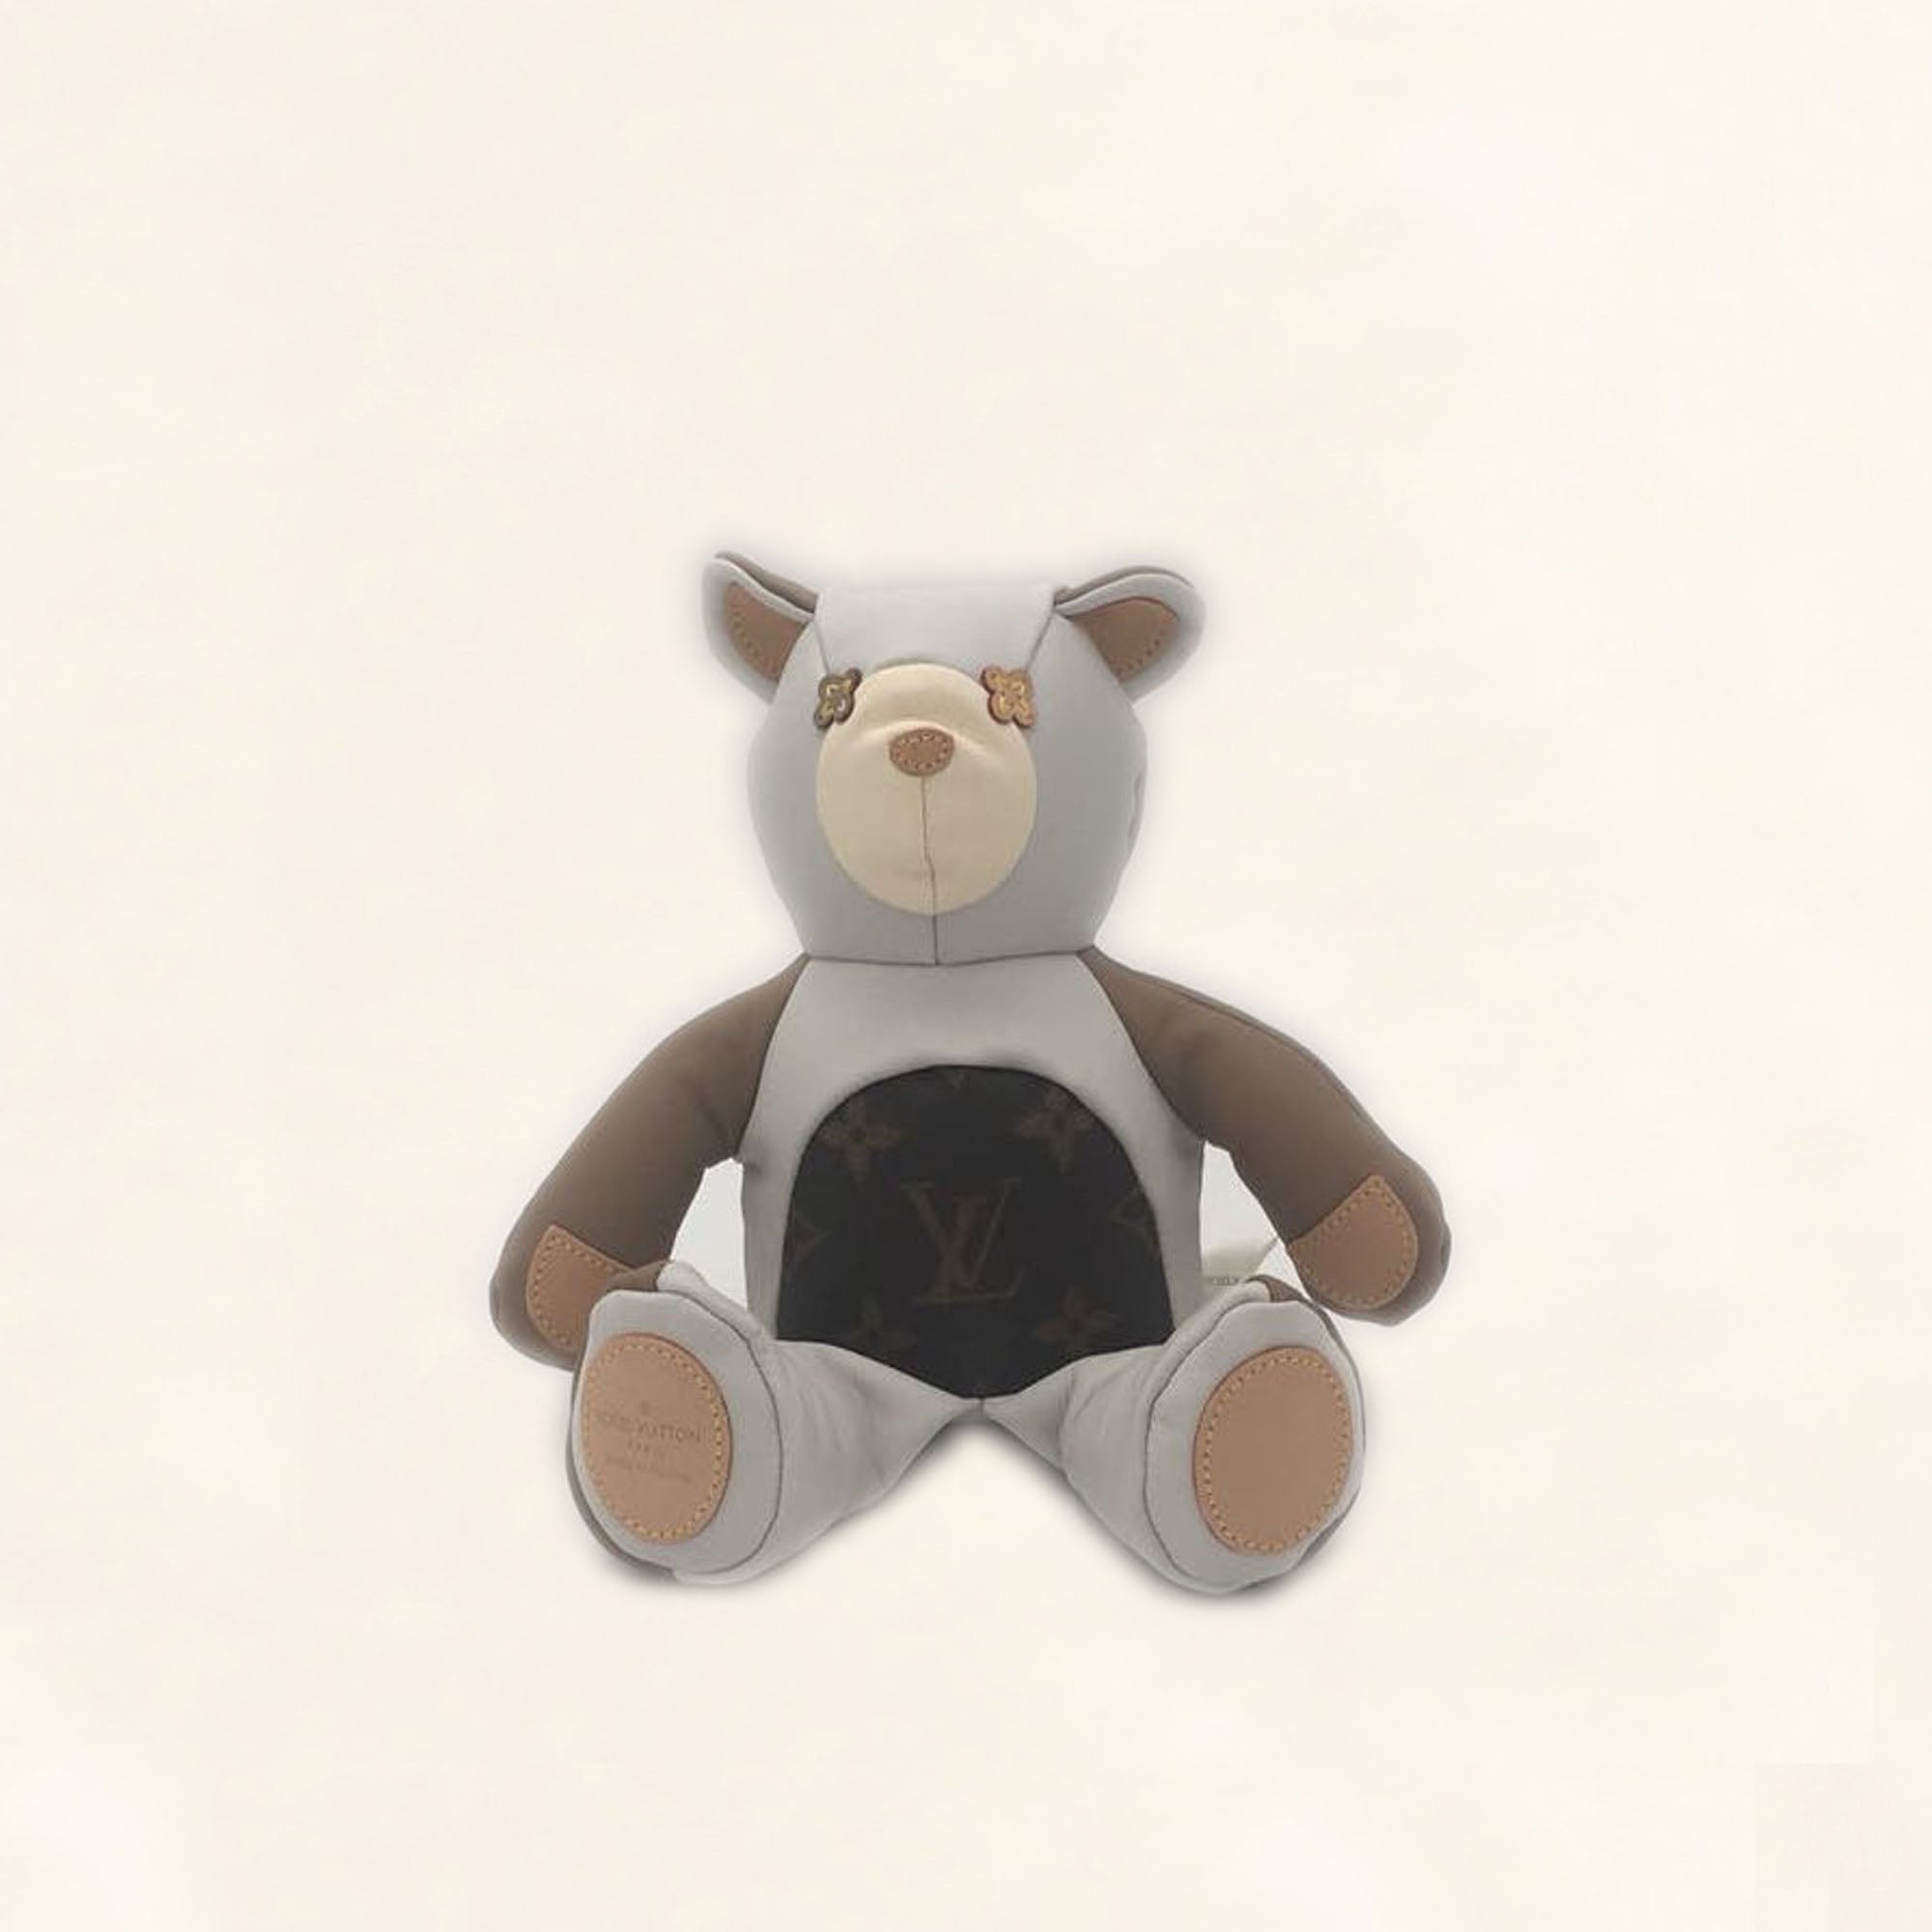 New Louis Vuitton Limited Edition 2005 & 2020 Dou Dou Teddy Bear